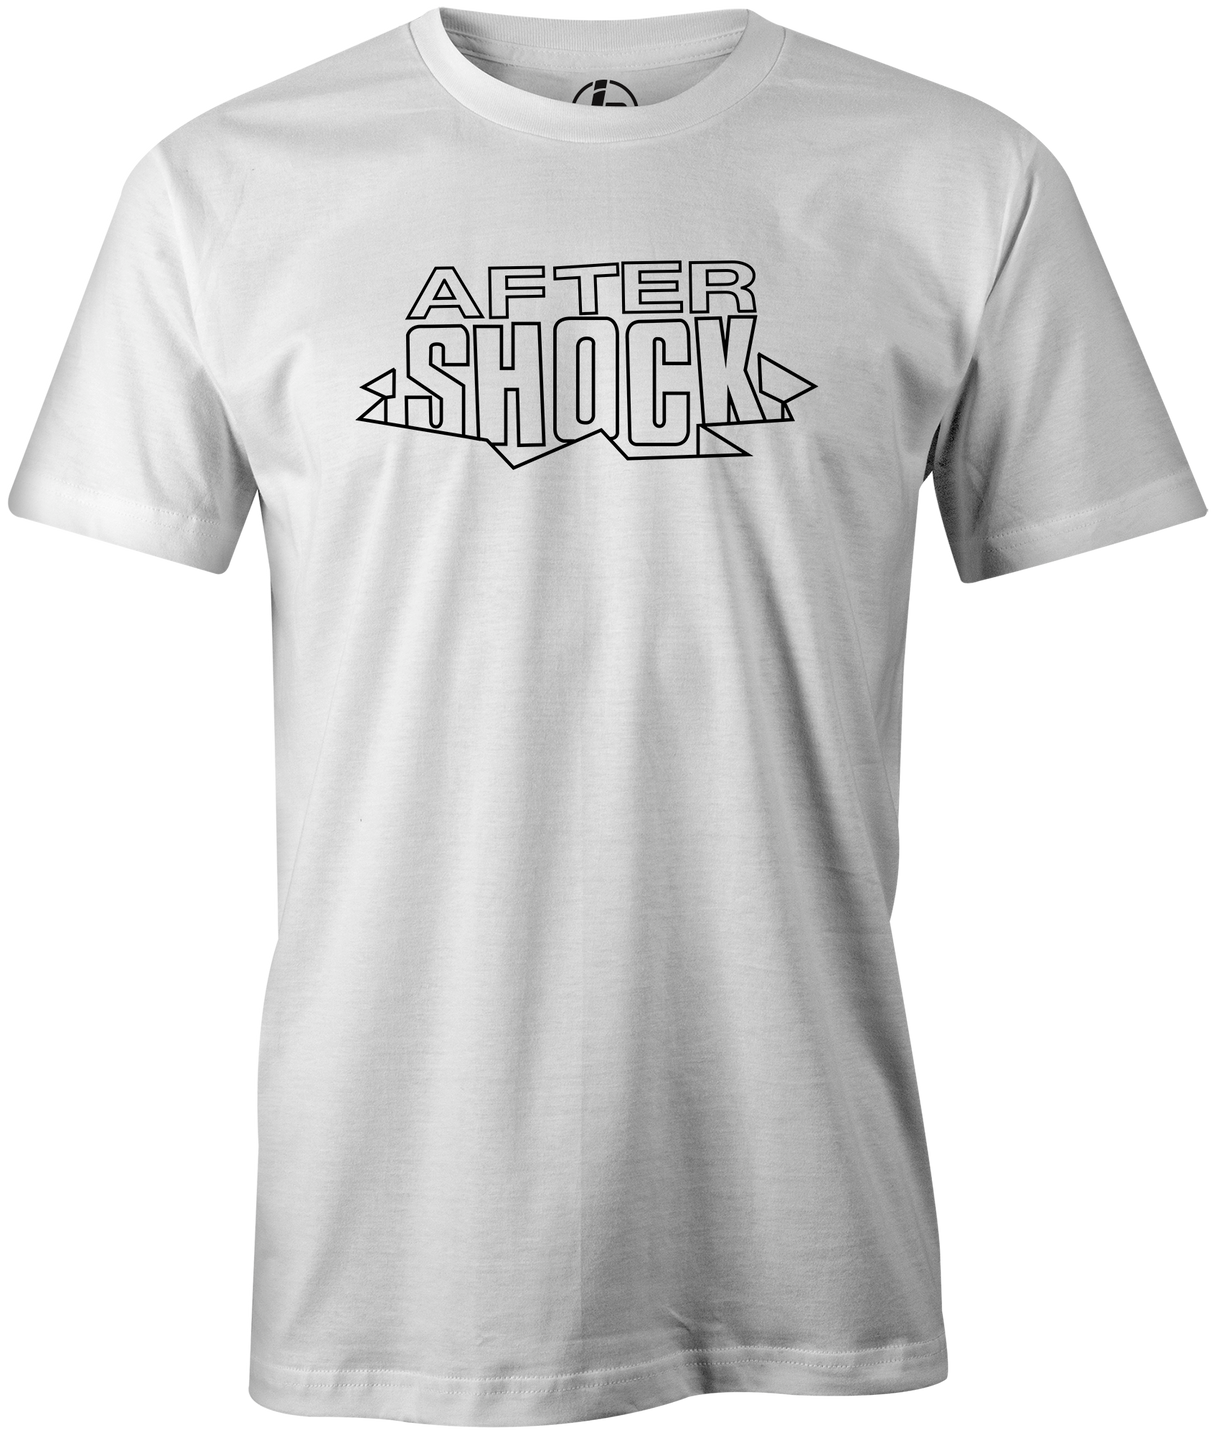 After Shock Men's T-shirt, White, Bowling, tee, tee-shirt, tee shirt, tshirt, retro